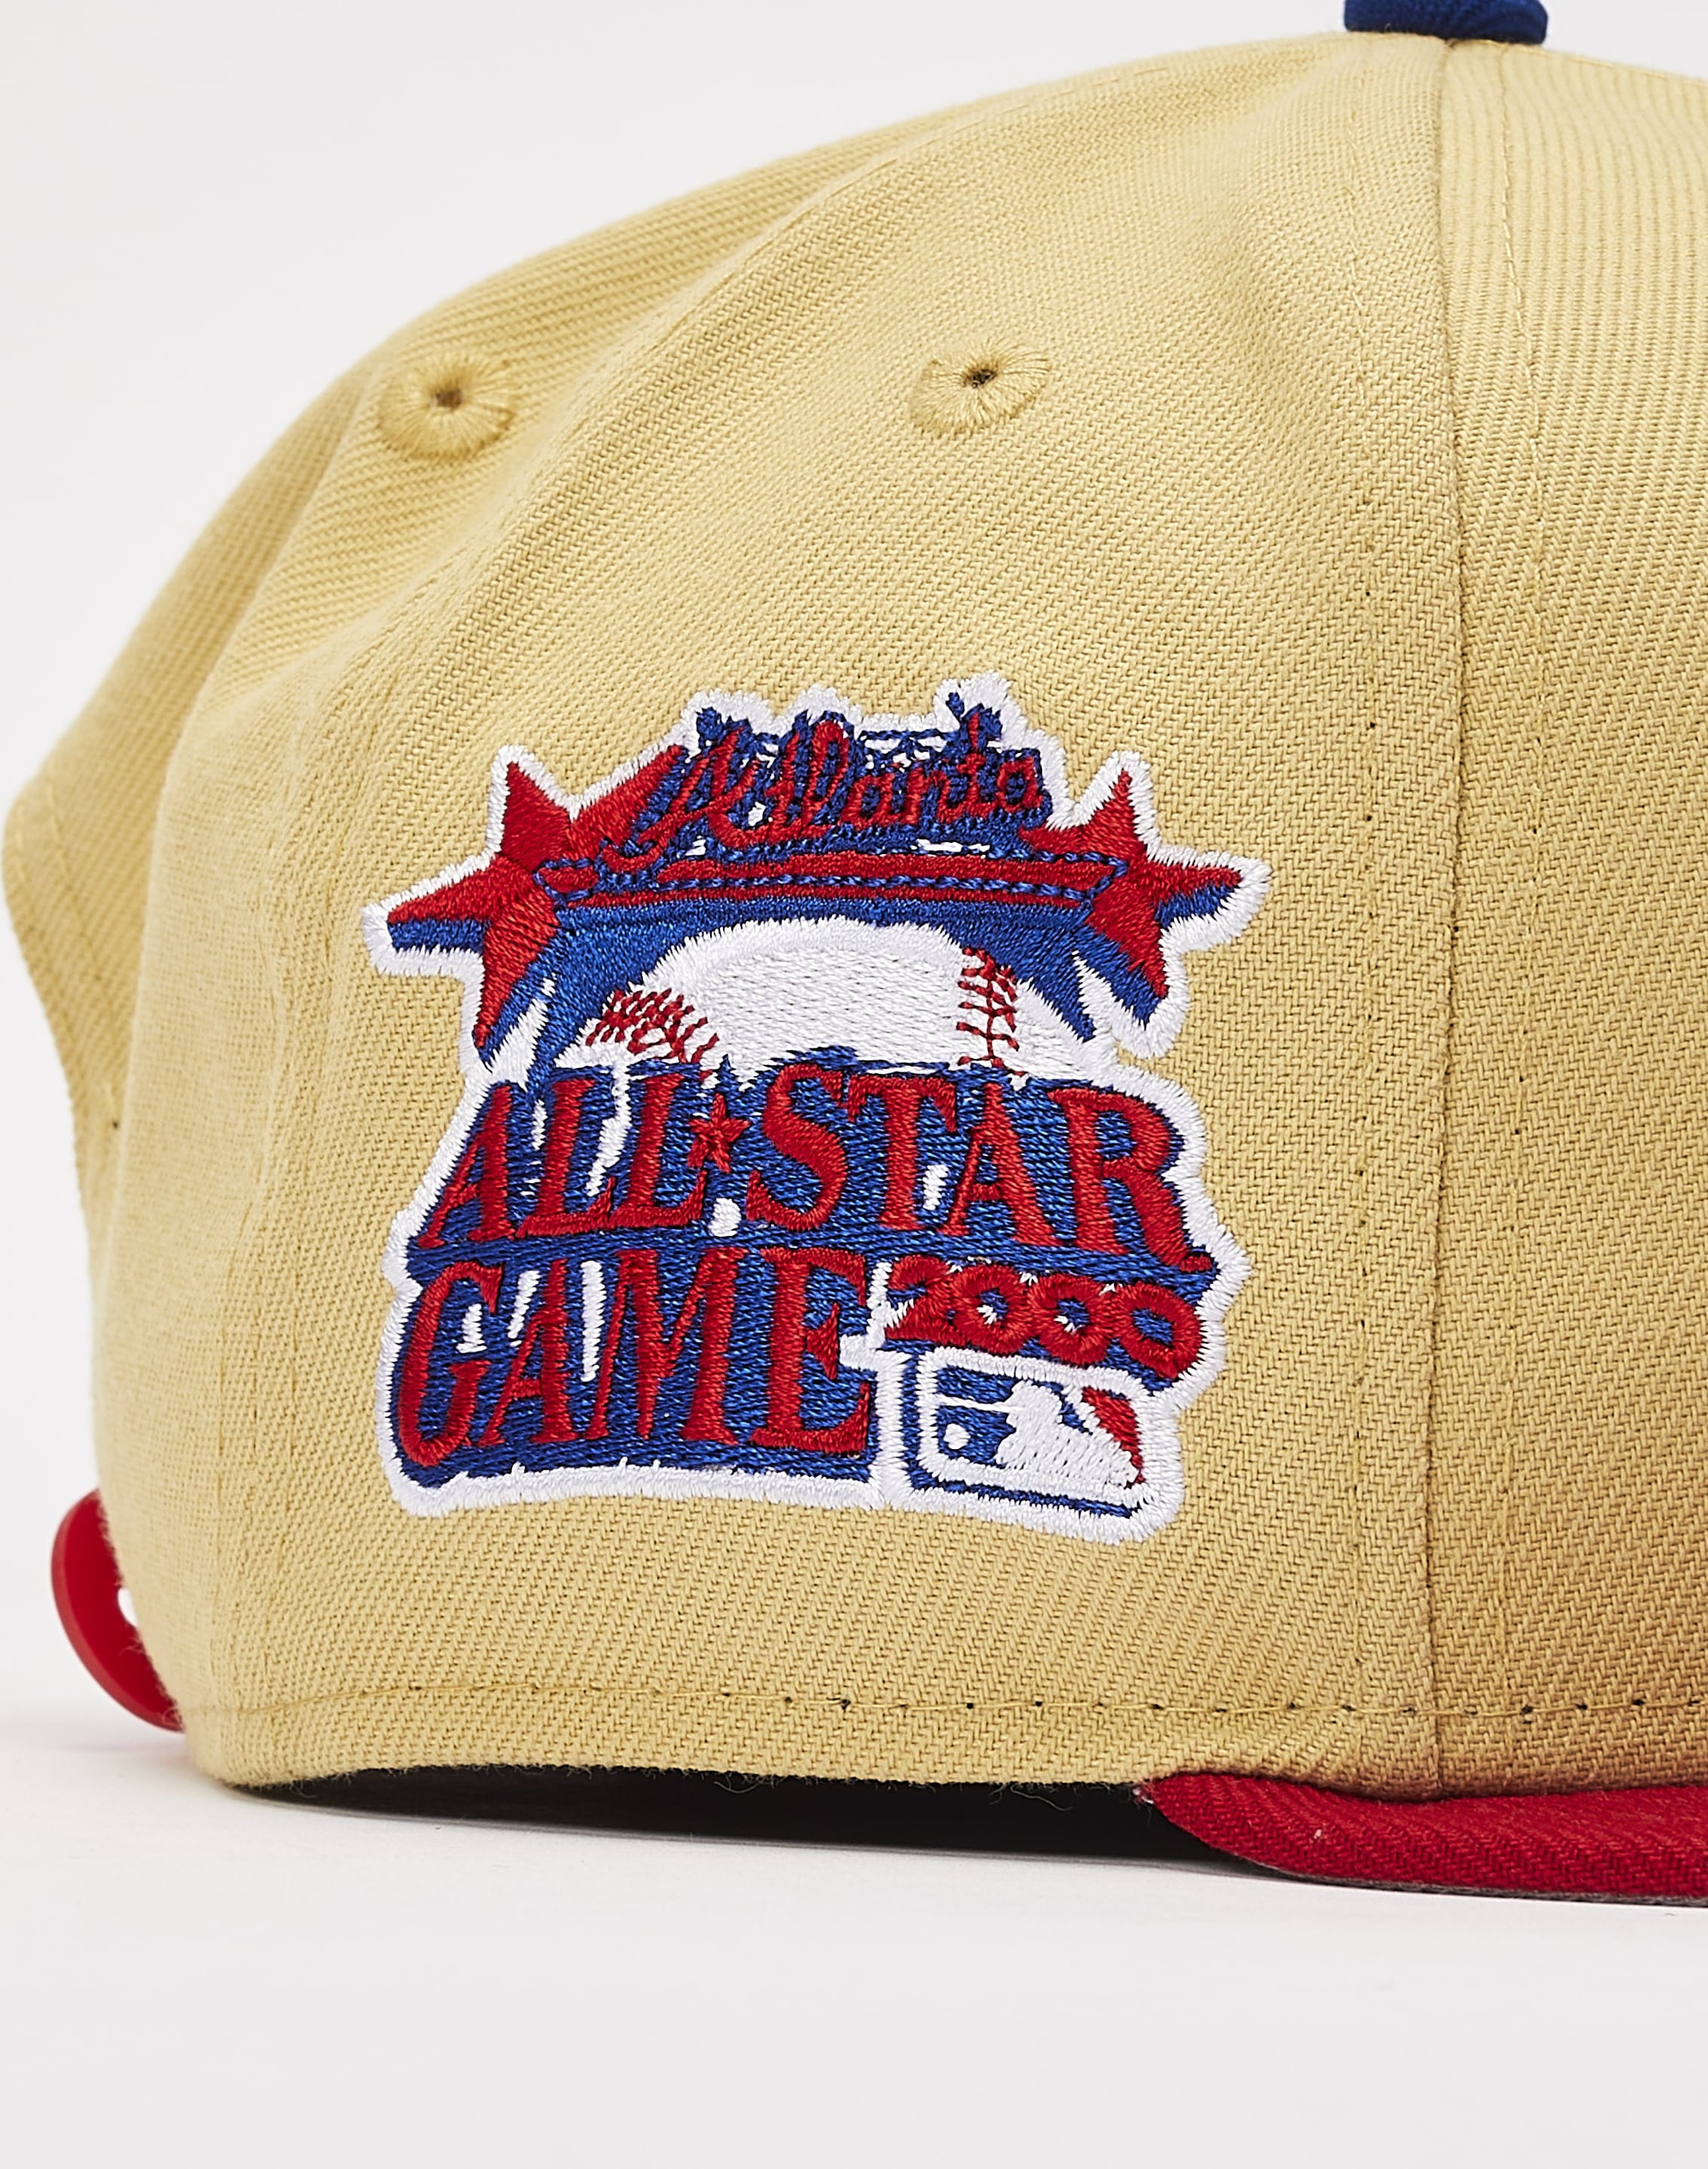 New Era Atlanta Braves 2000 All-Star Game 9Fifty Snapback Hat – DTLR